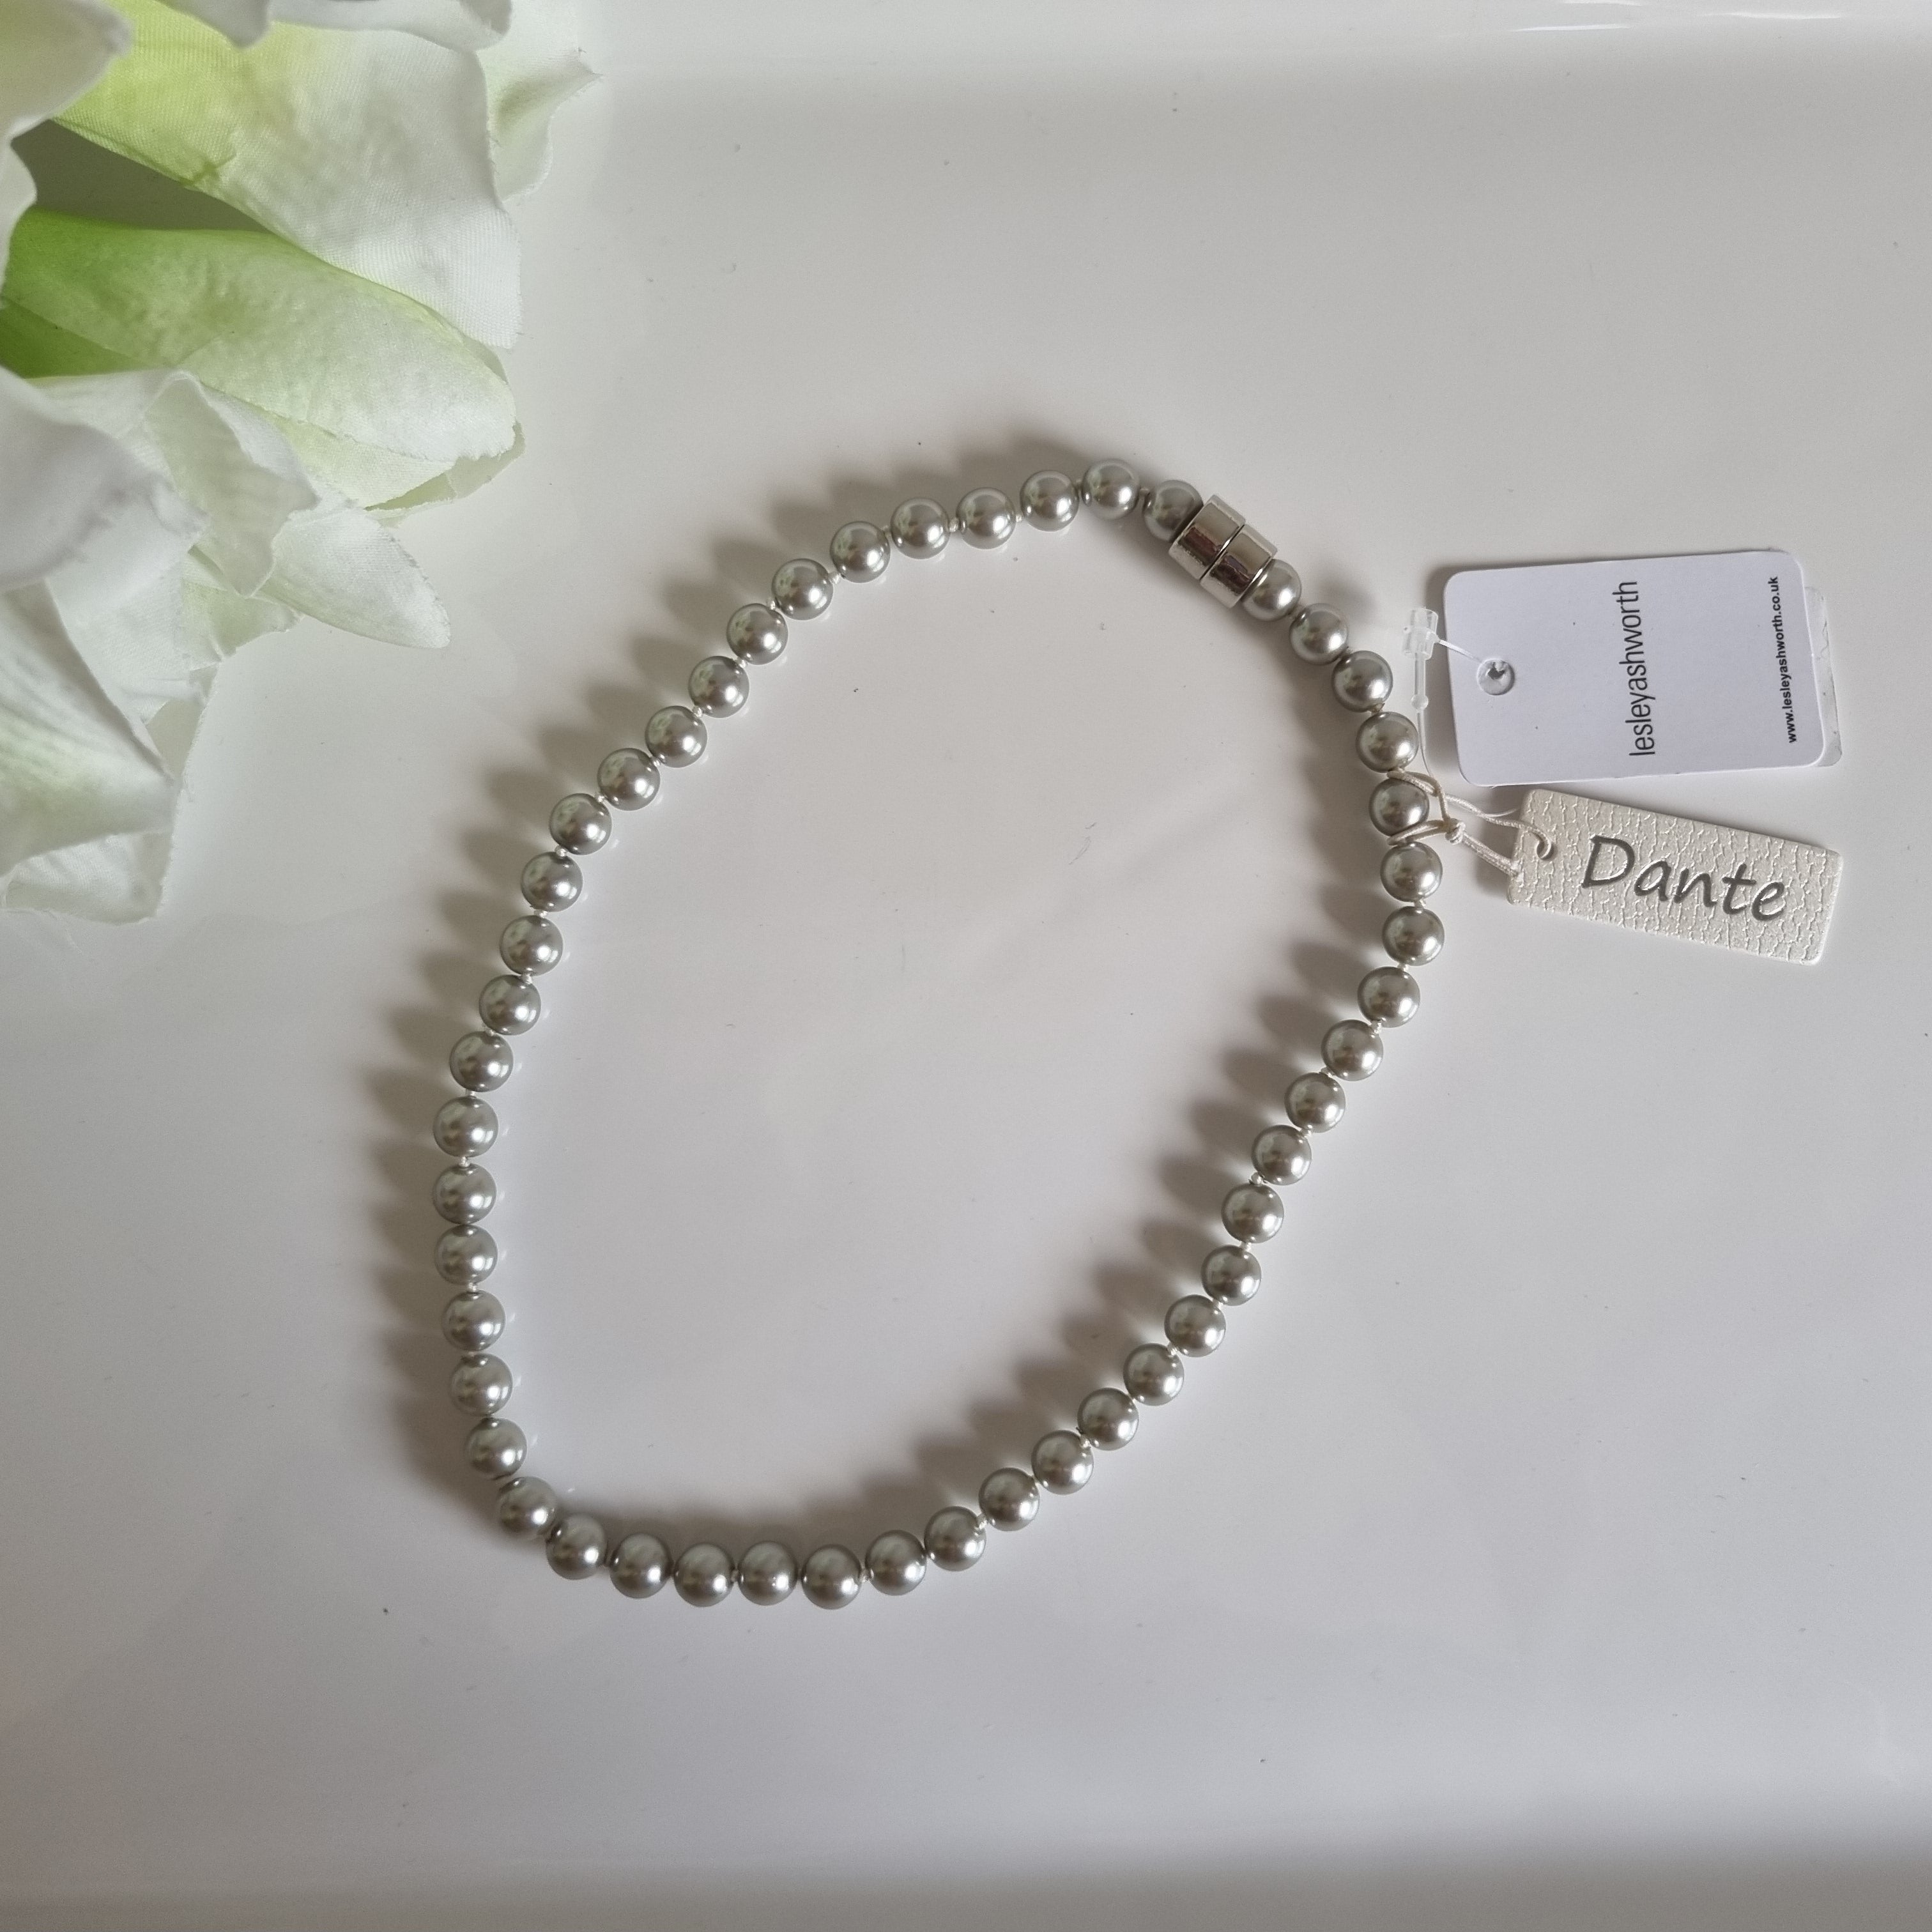 Dante silver pearl necklace – Lesley Ashworth